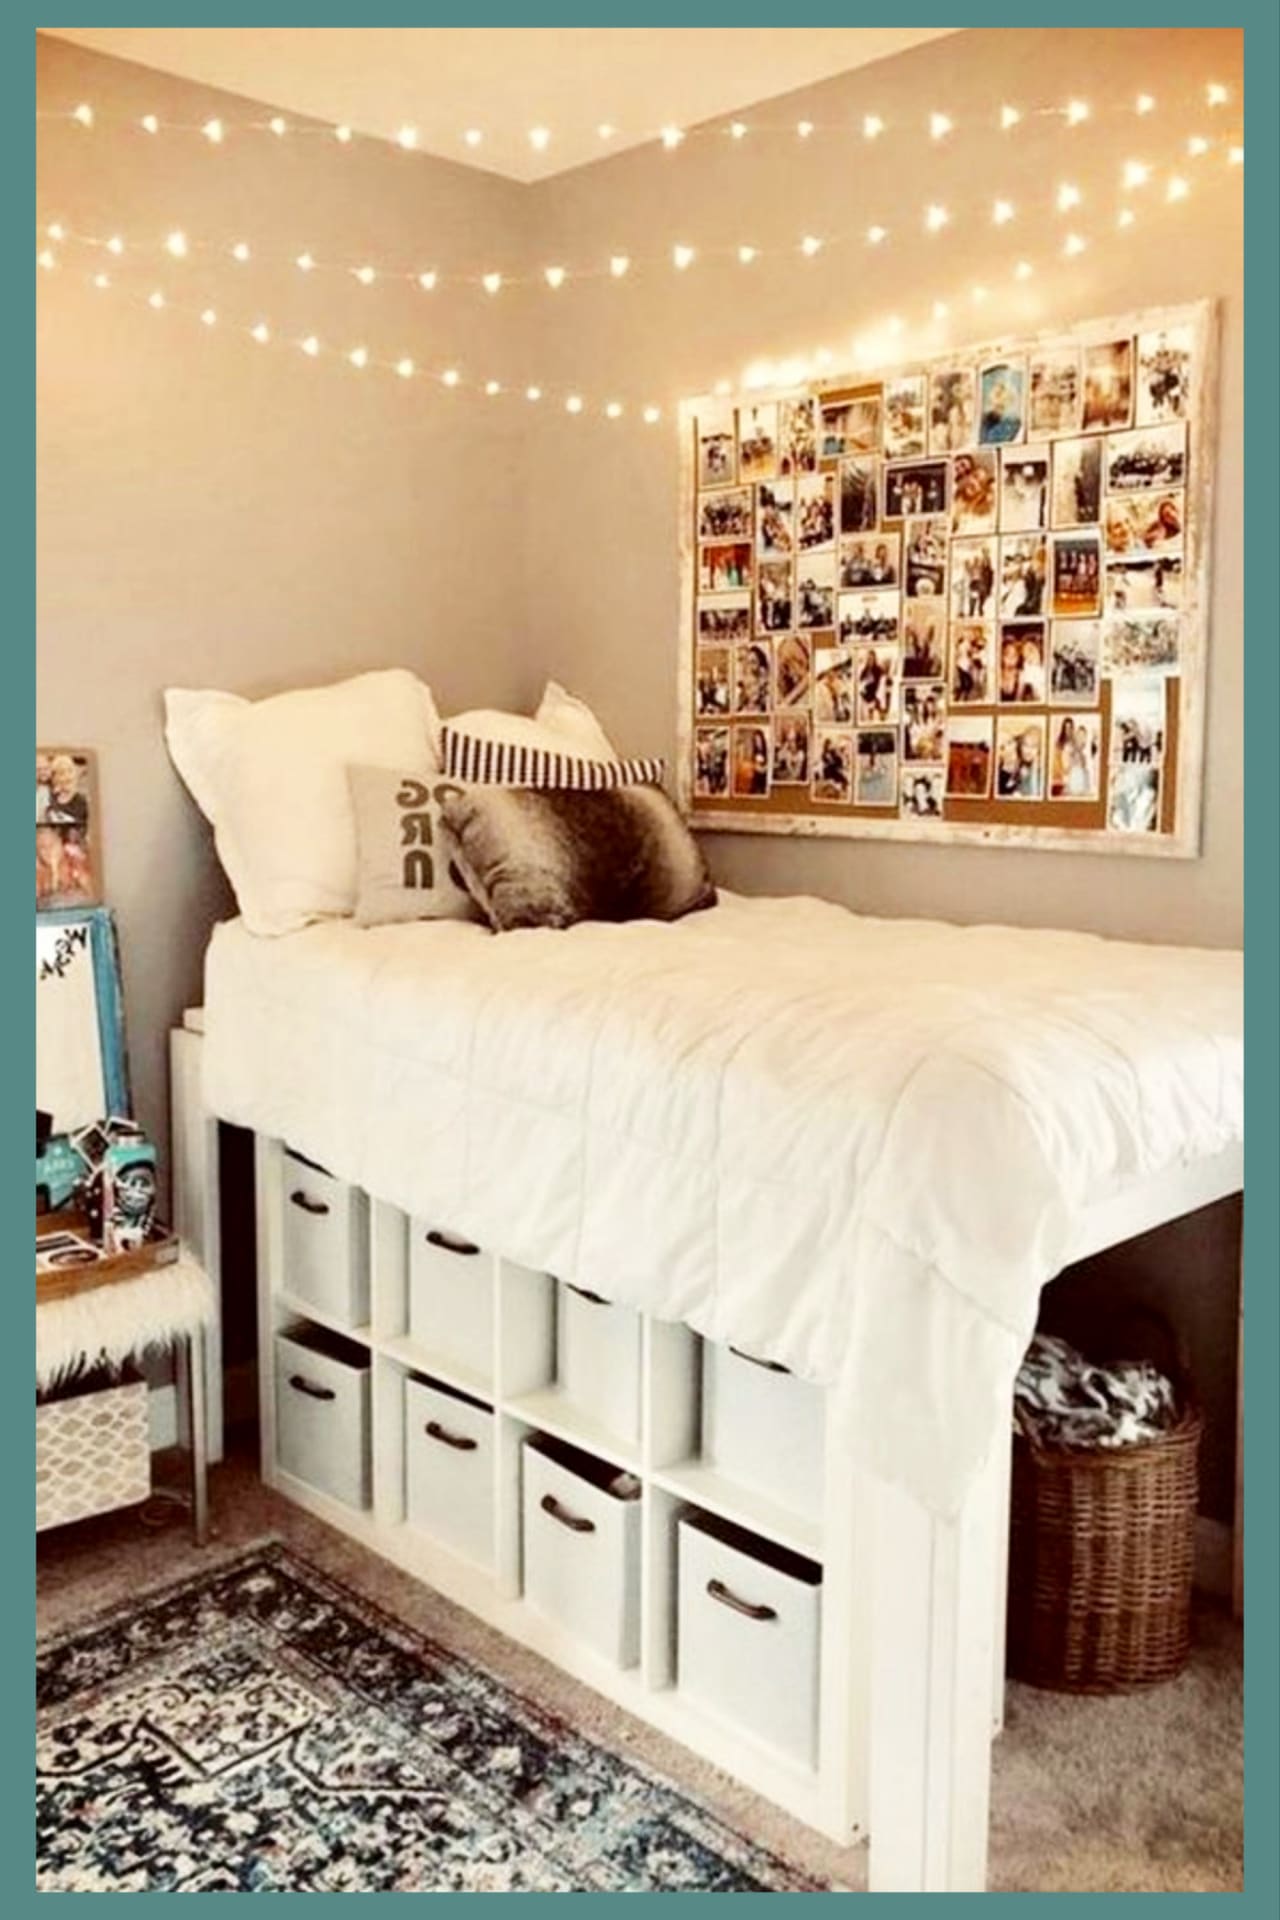 DIY Dorm Room Ideas Dorm Decorating Ideas PICTURES for 2019